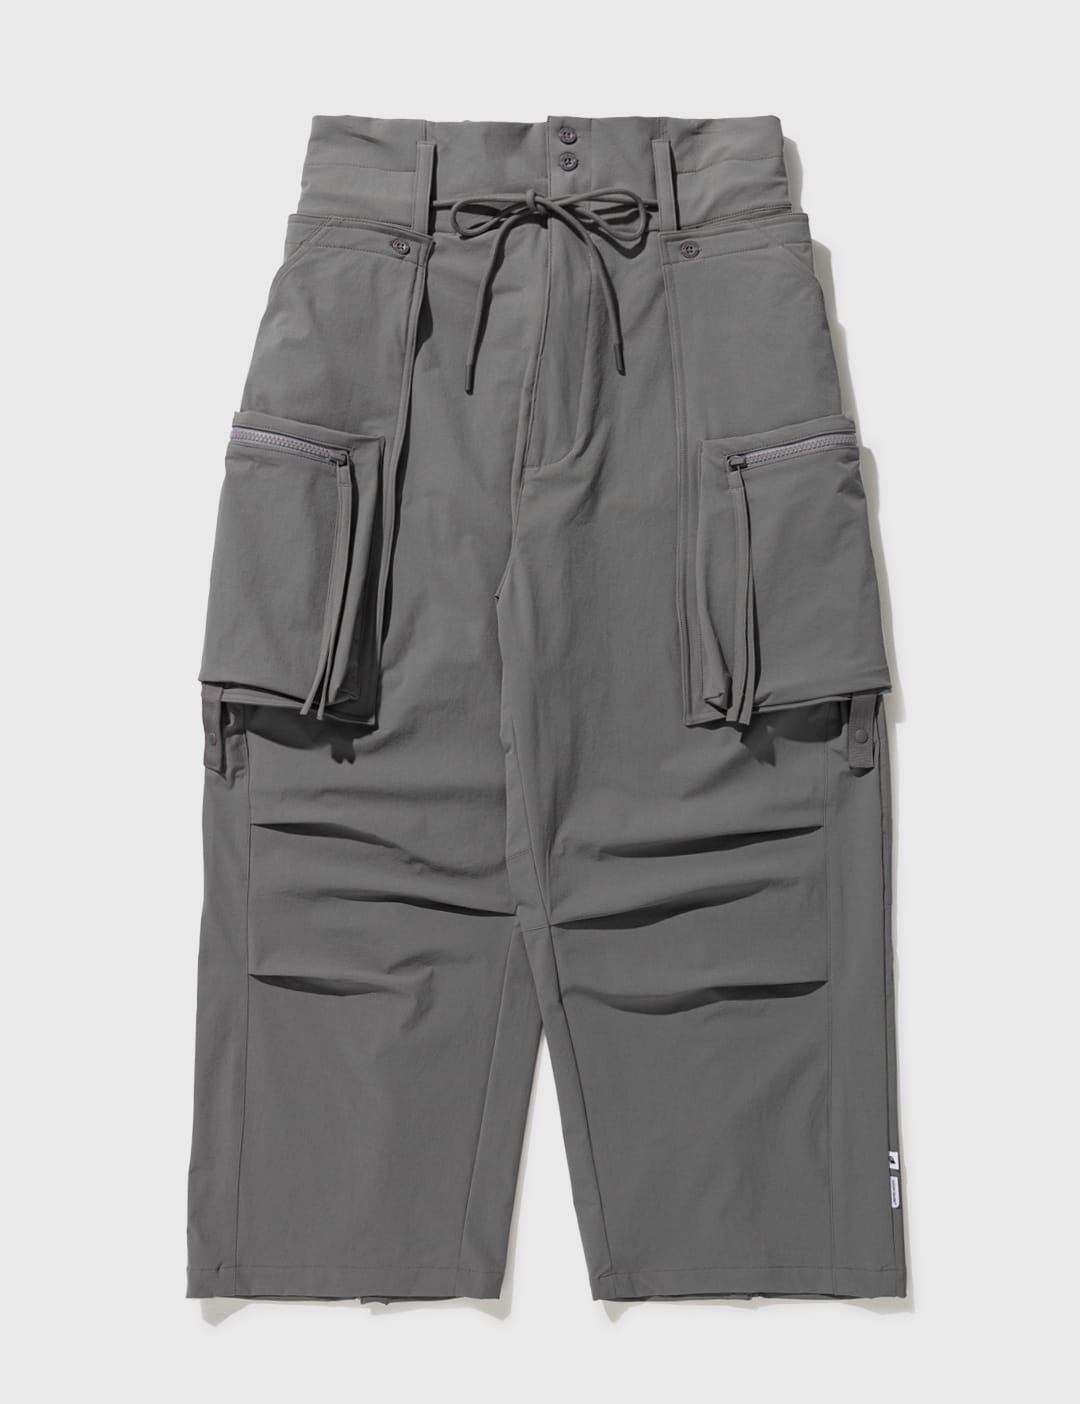 GOOPiMADE (A).05G -“DUET” R-Shield Pocket Trousers